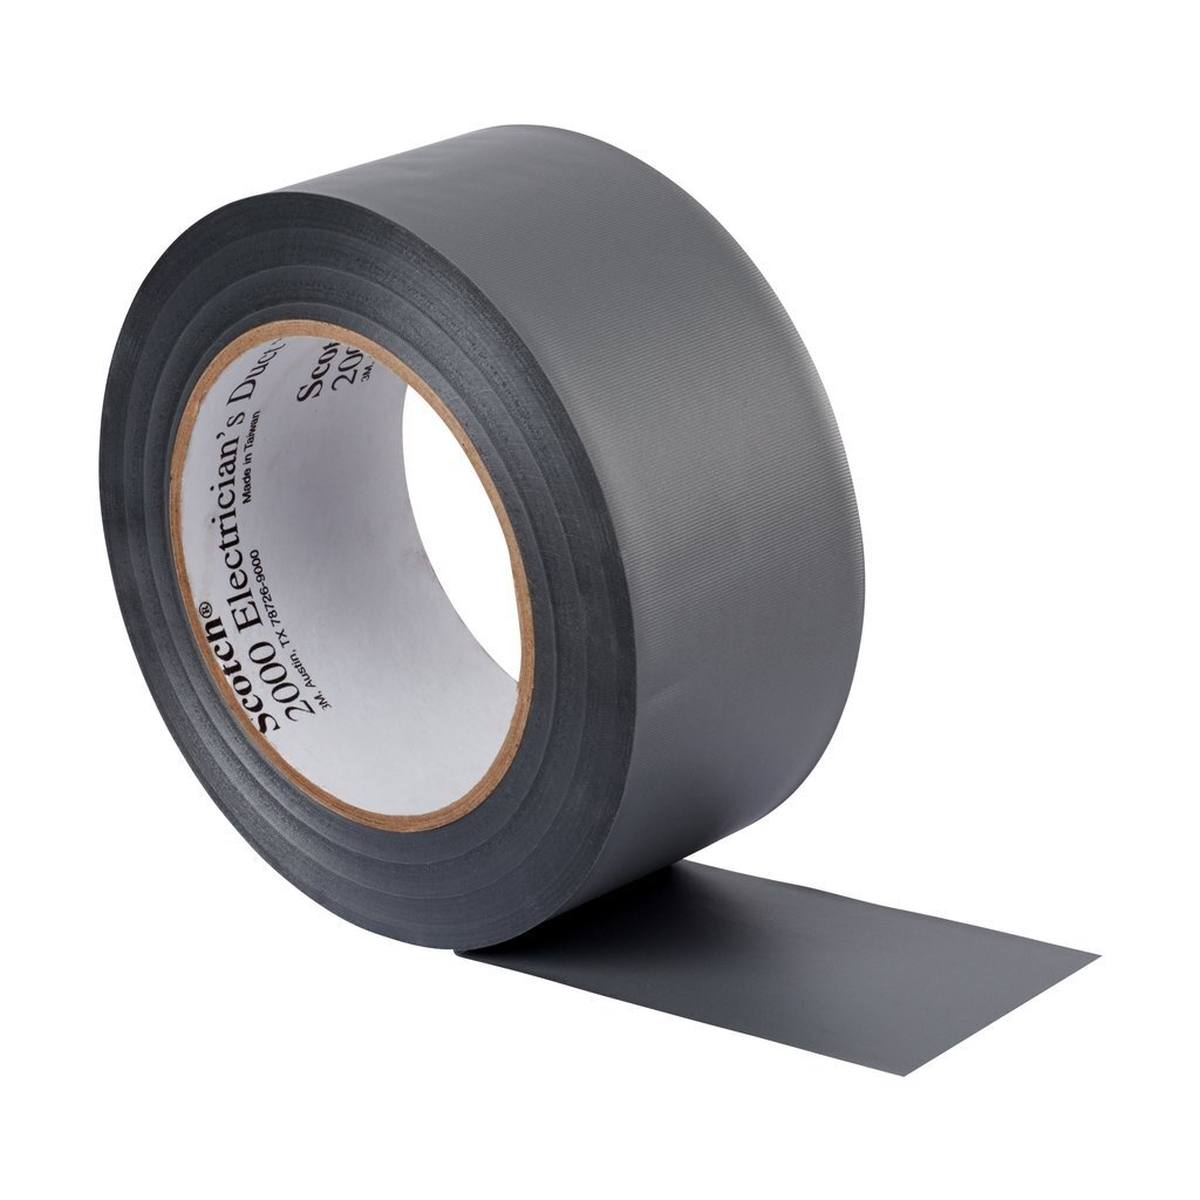 3M Scotch 2000 universal adhesive tape, gray, 50 mm x 46 m, 0.15 mm